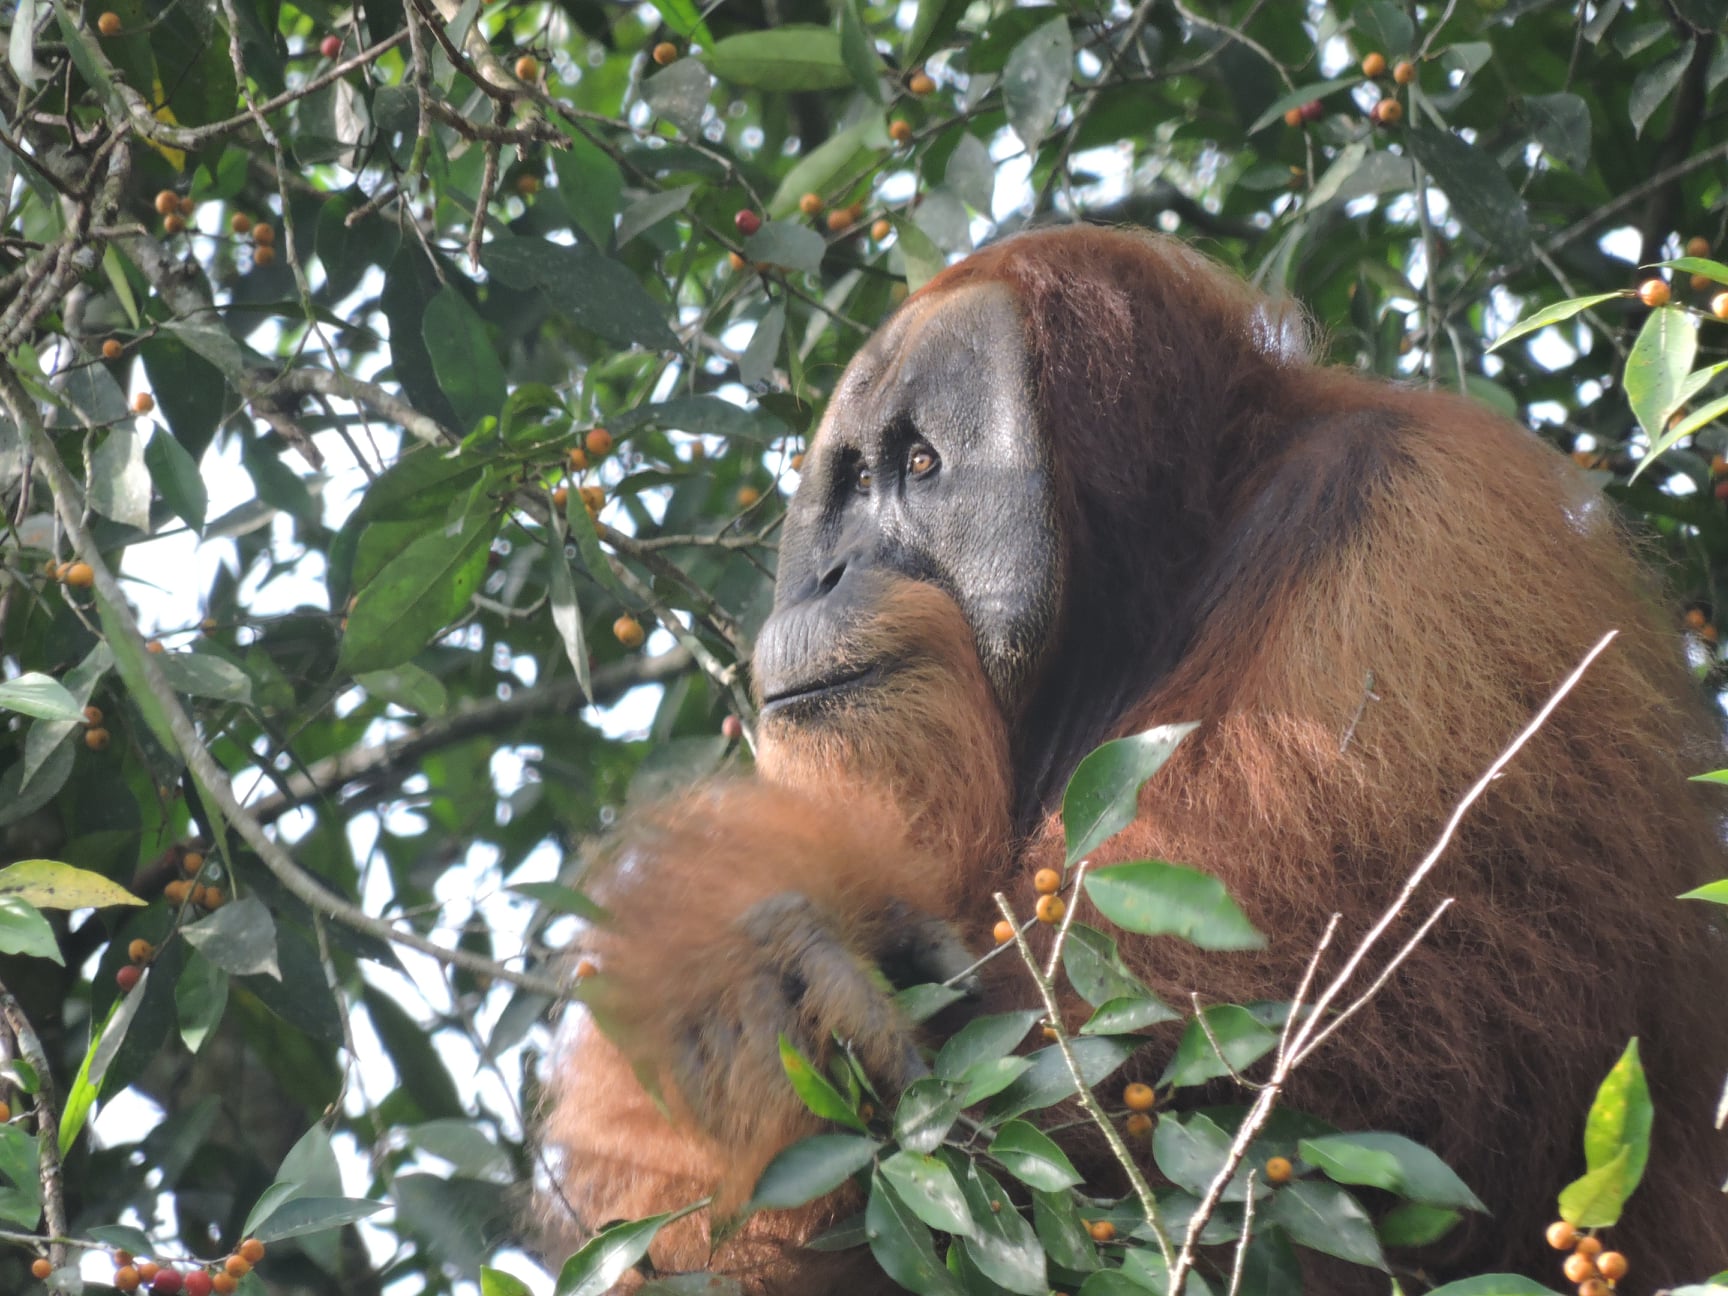 Spotting orangutans in the wild